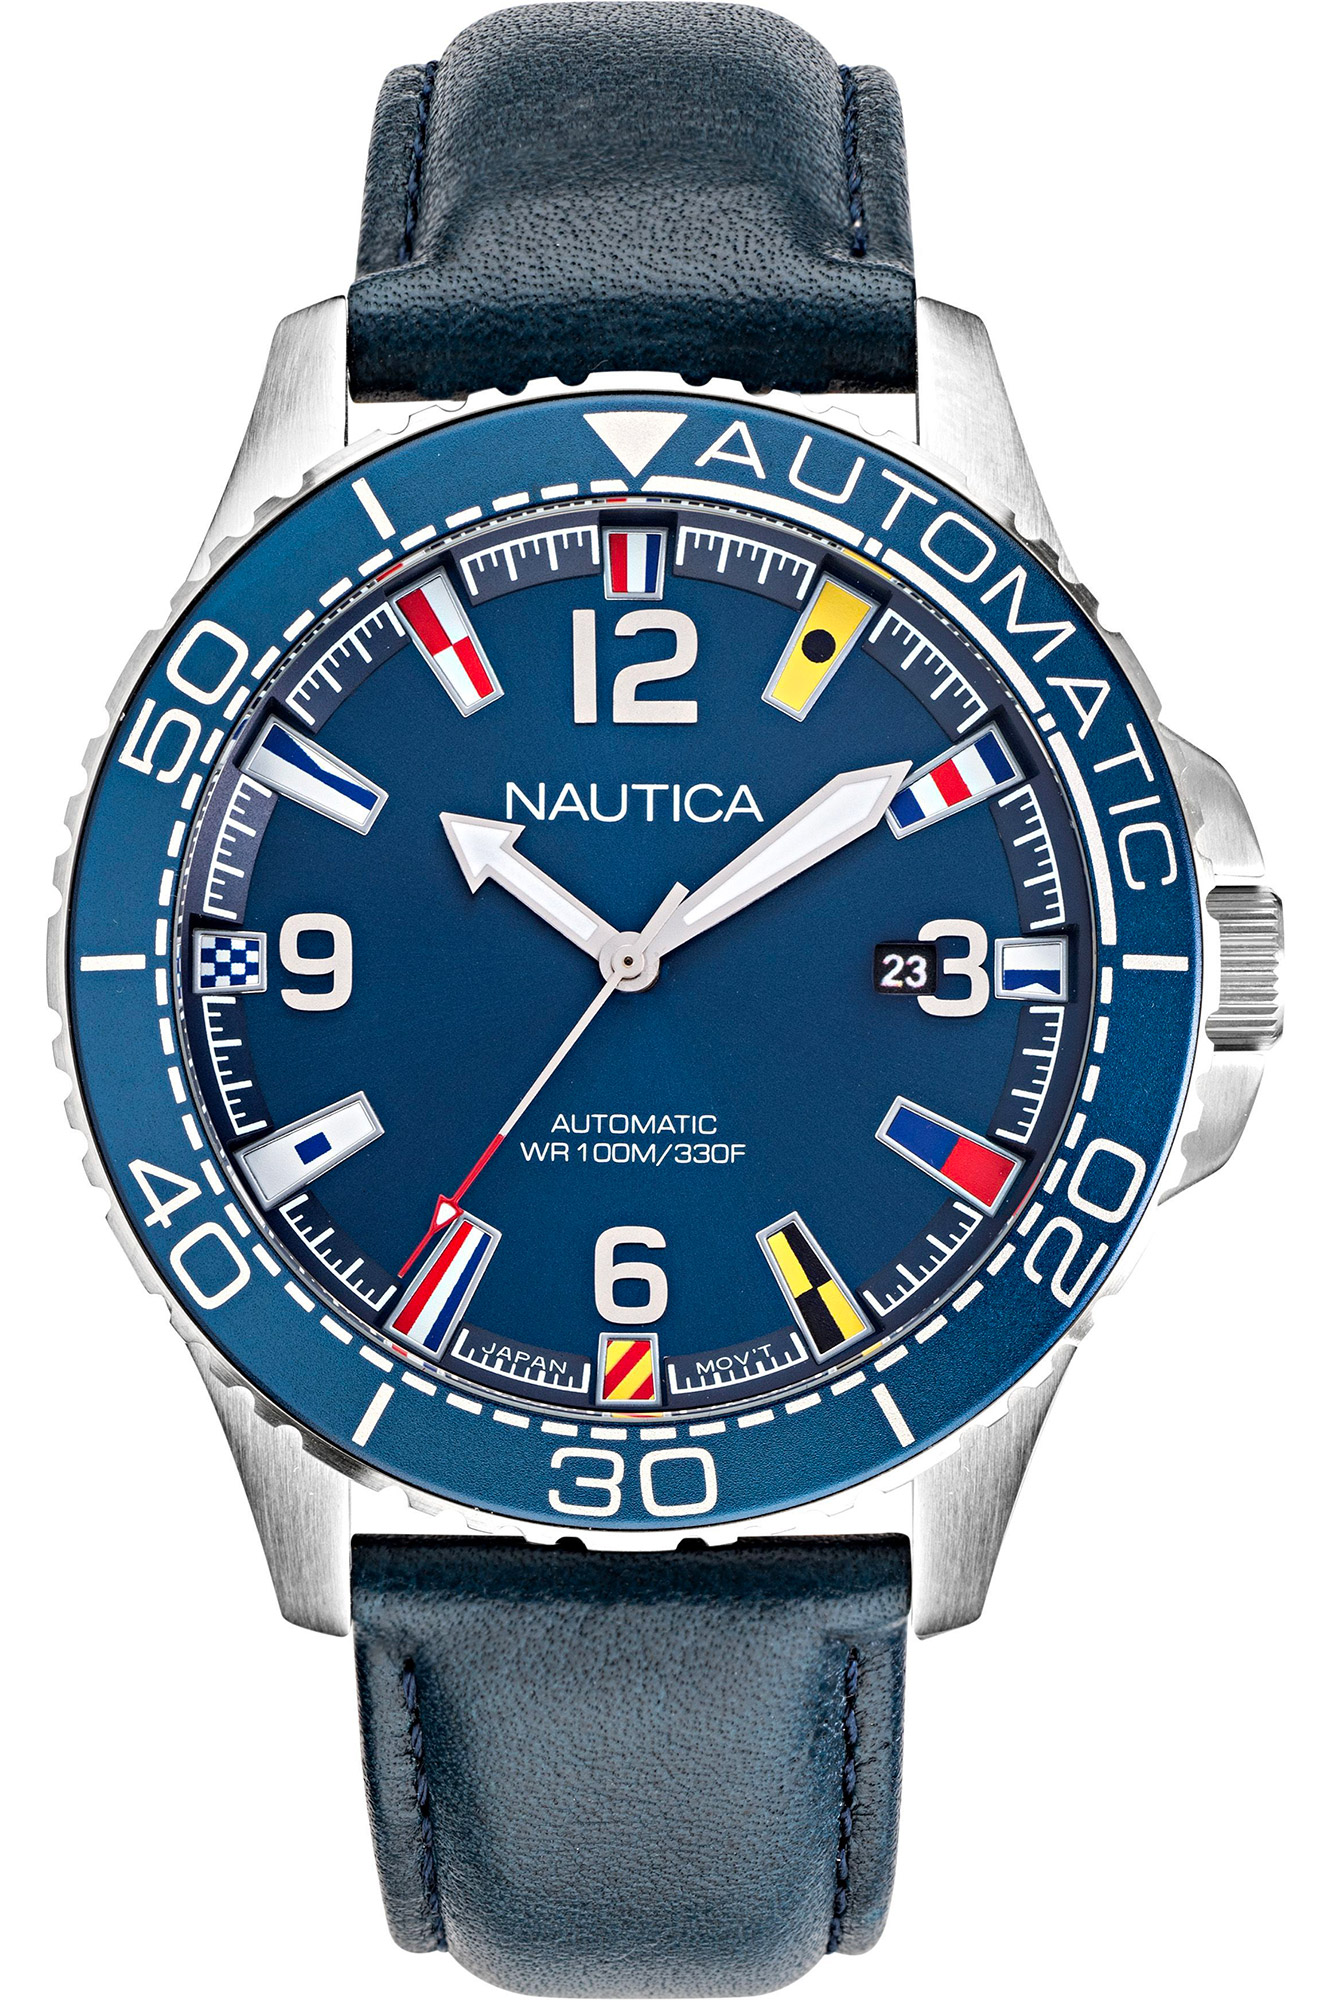 Watch Nautica napjbf912